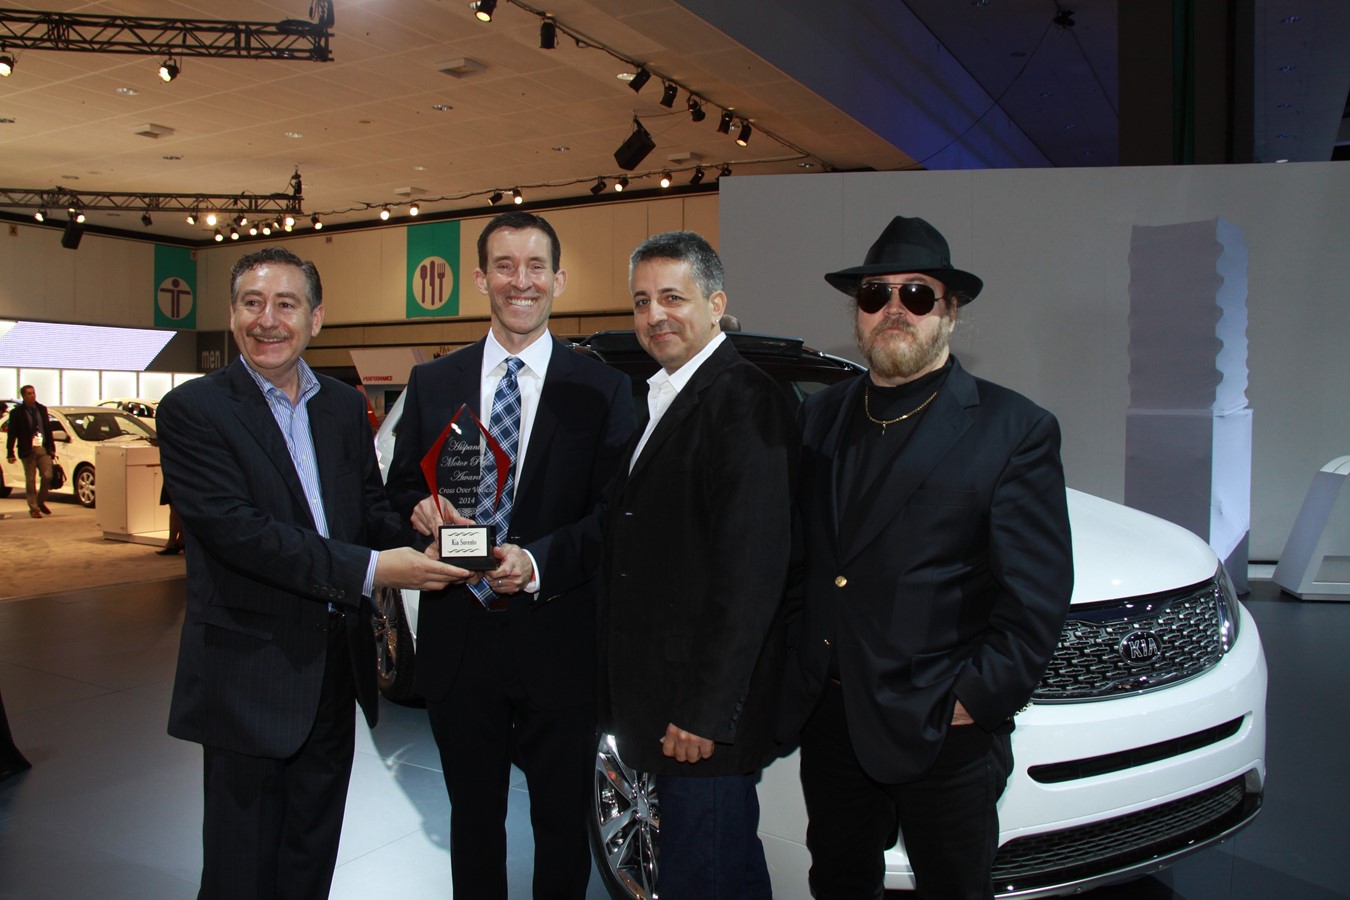 2014 KIA SORENTO NAMED TO "TOP 10 CARS OF THE YEAR" LIST BY HISPANIC MOTOR PRESS AWARDS